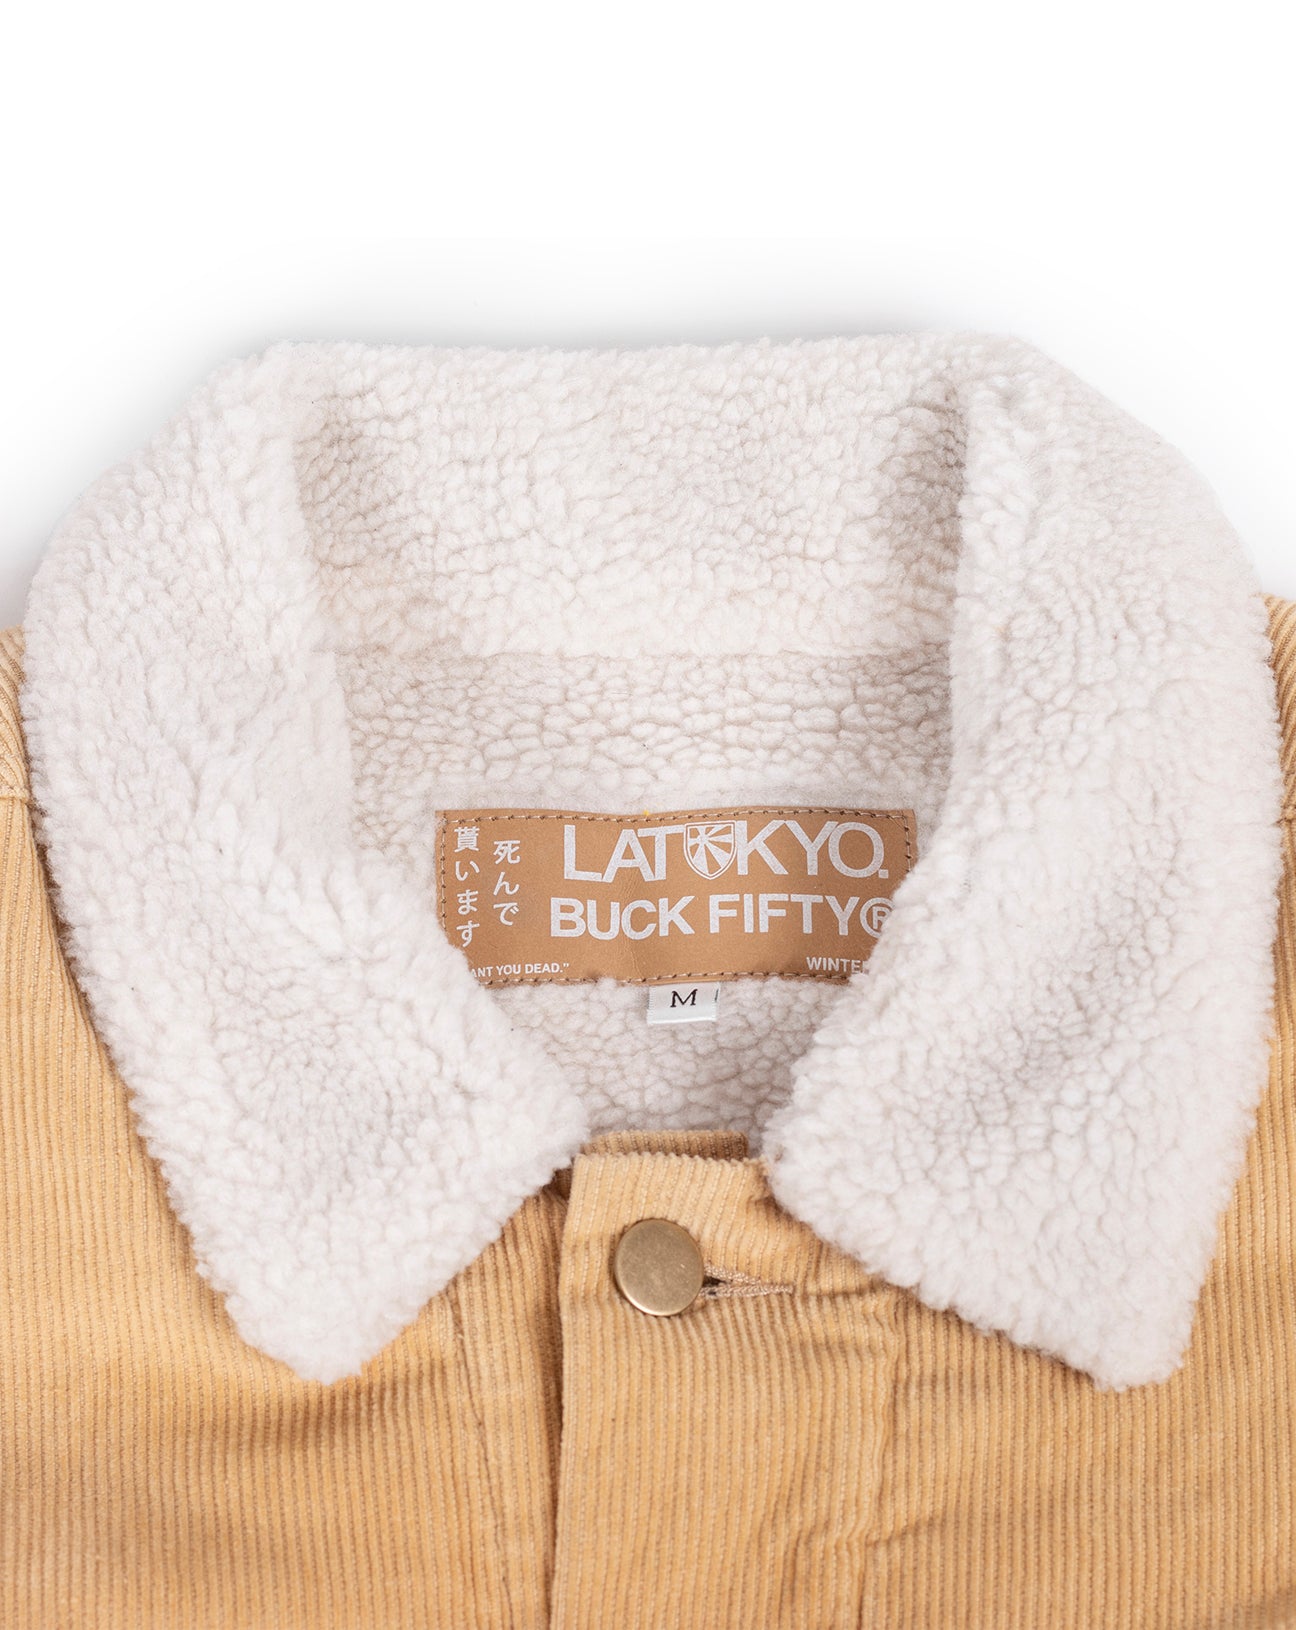 Latokyo x BUCKFIFTY "Silence" Jacket (Wheat)